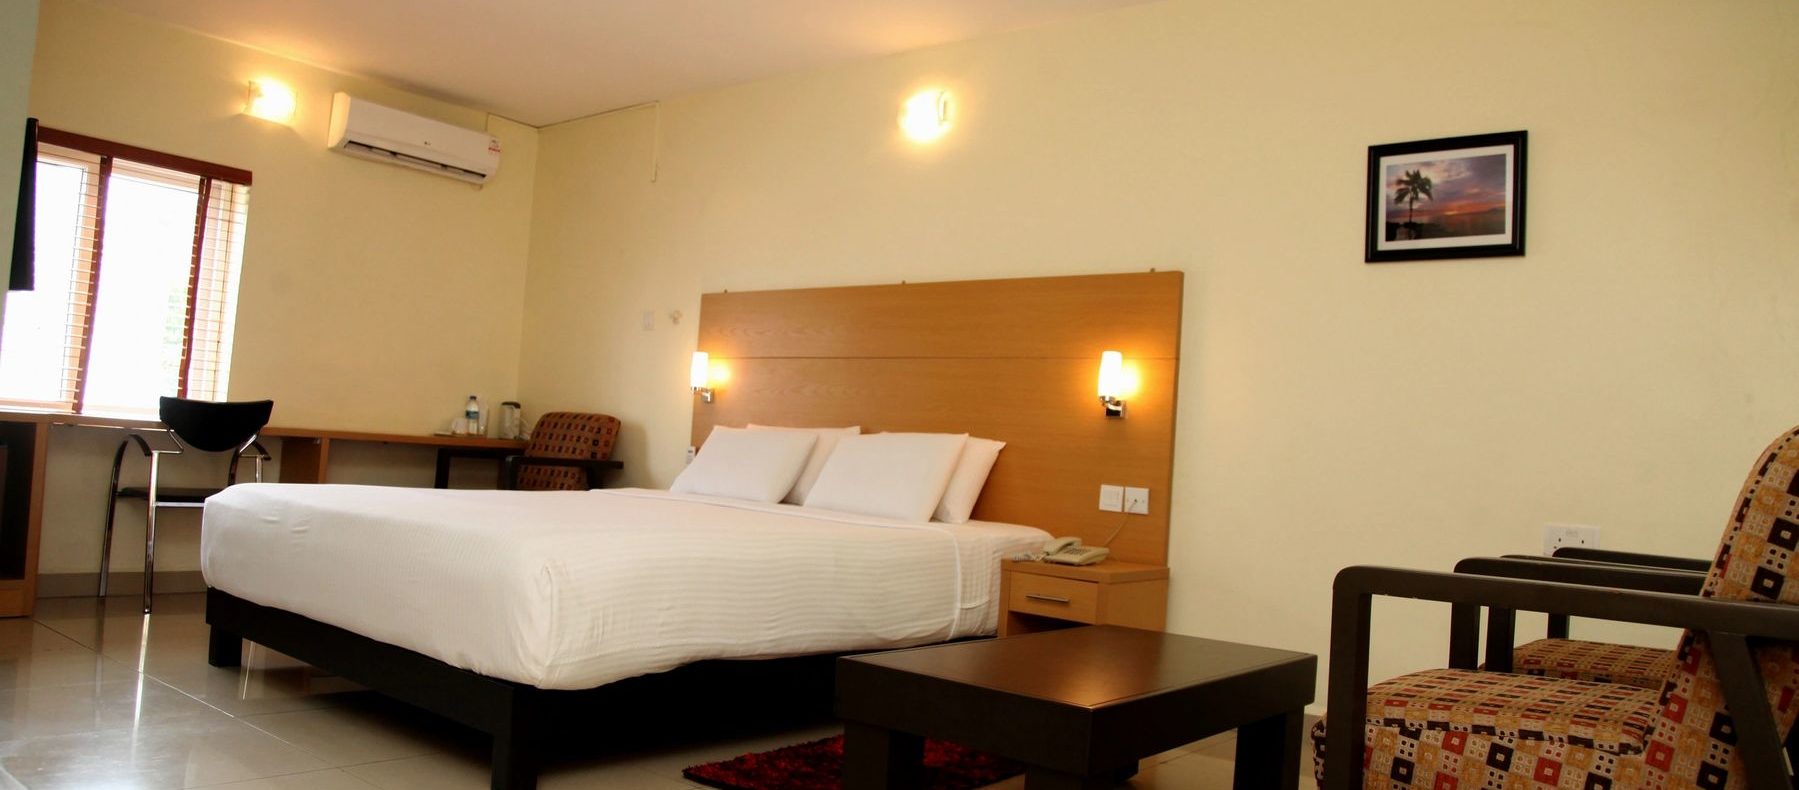 Hotel Executive Royale2 In Ibadan Nigeria